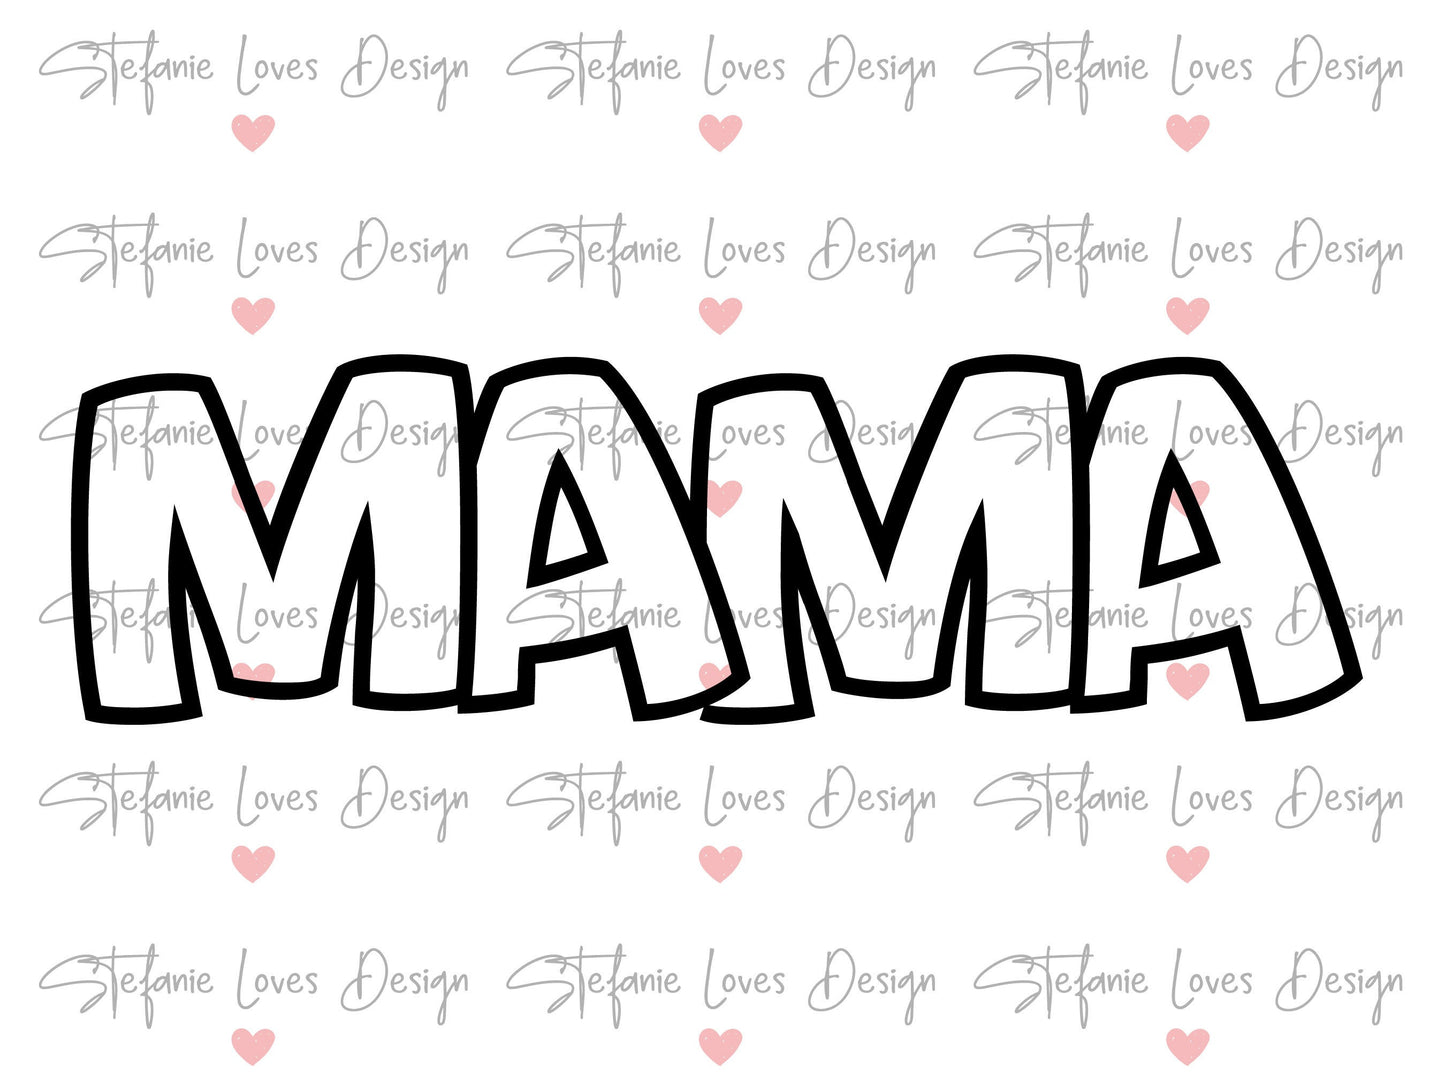 Mama SVG Bundle, Mama svg, Mom svg, Girl Mom Girl Mama Boy Mom Boy Mama Bundle, Digital Design Bundle